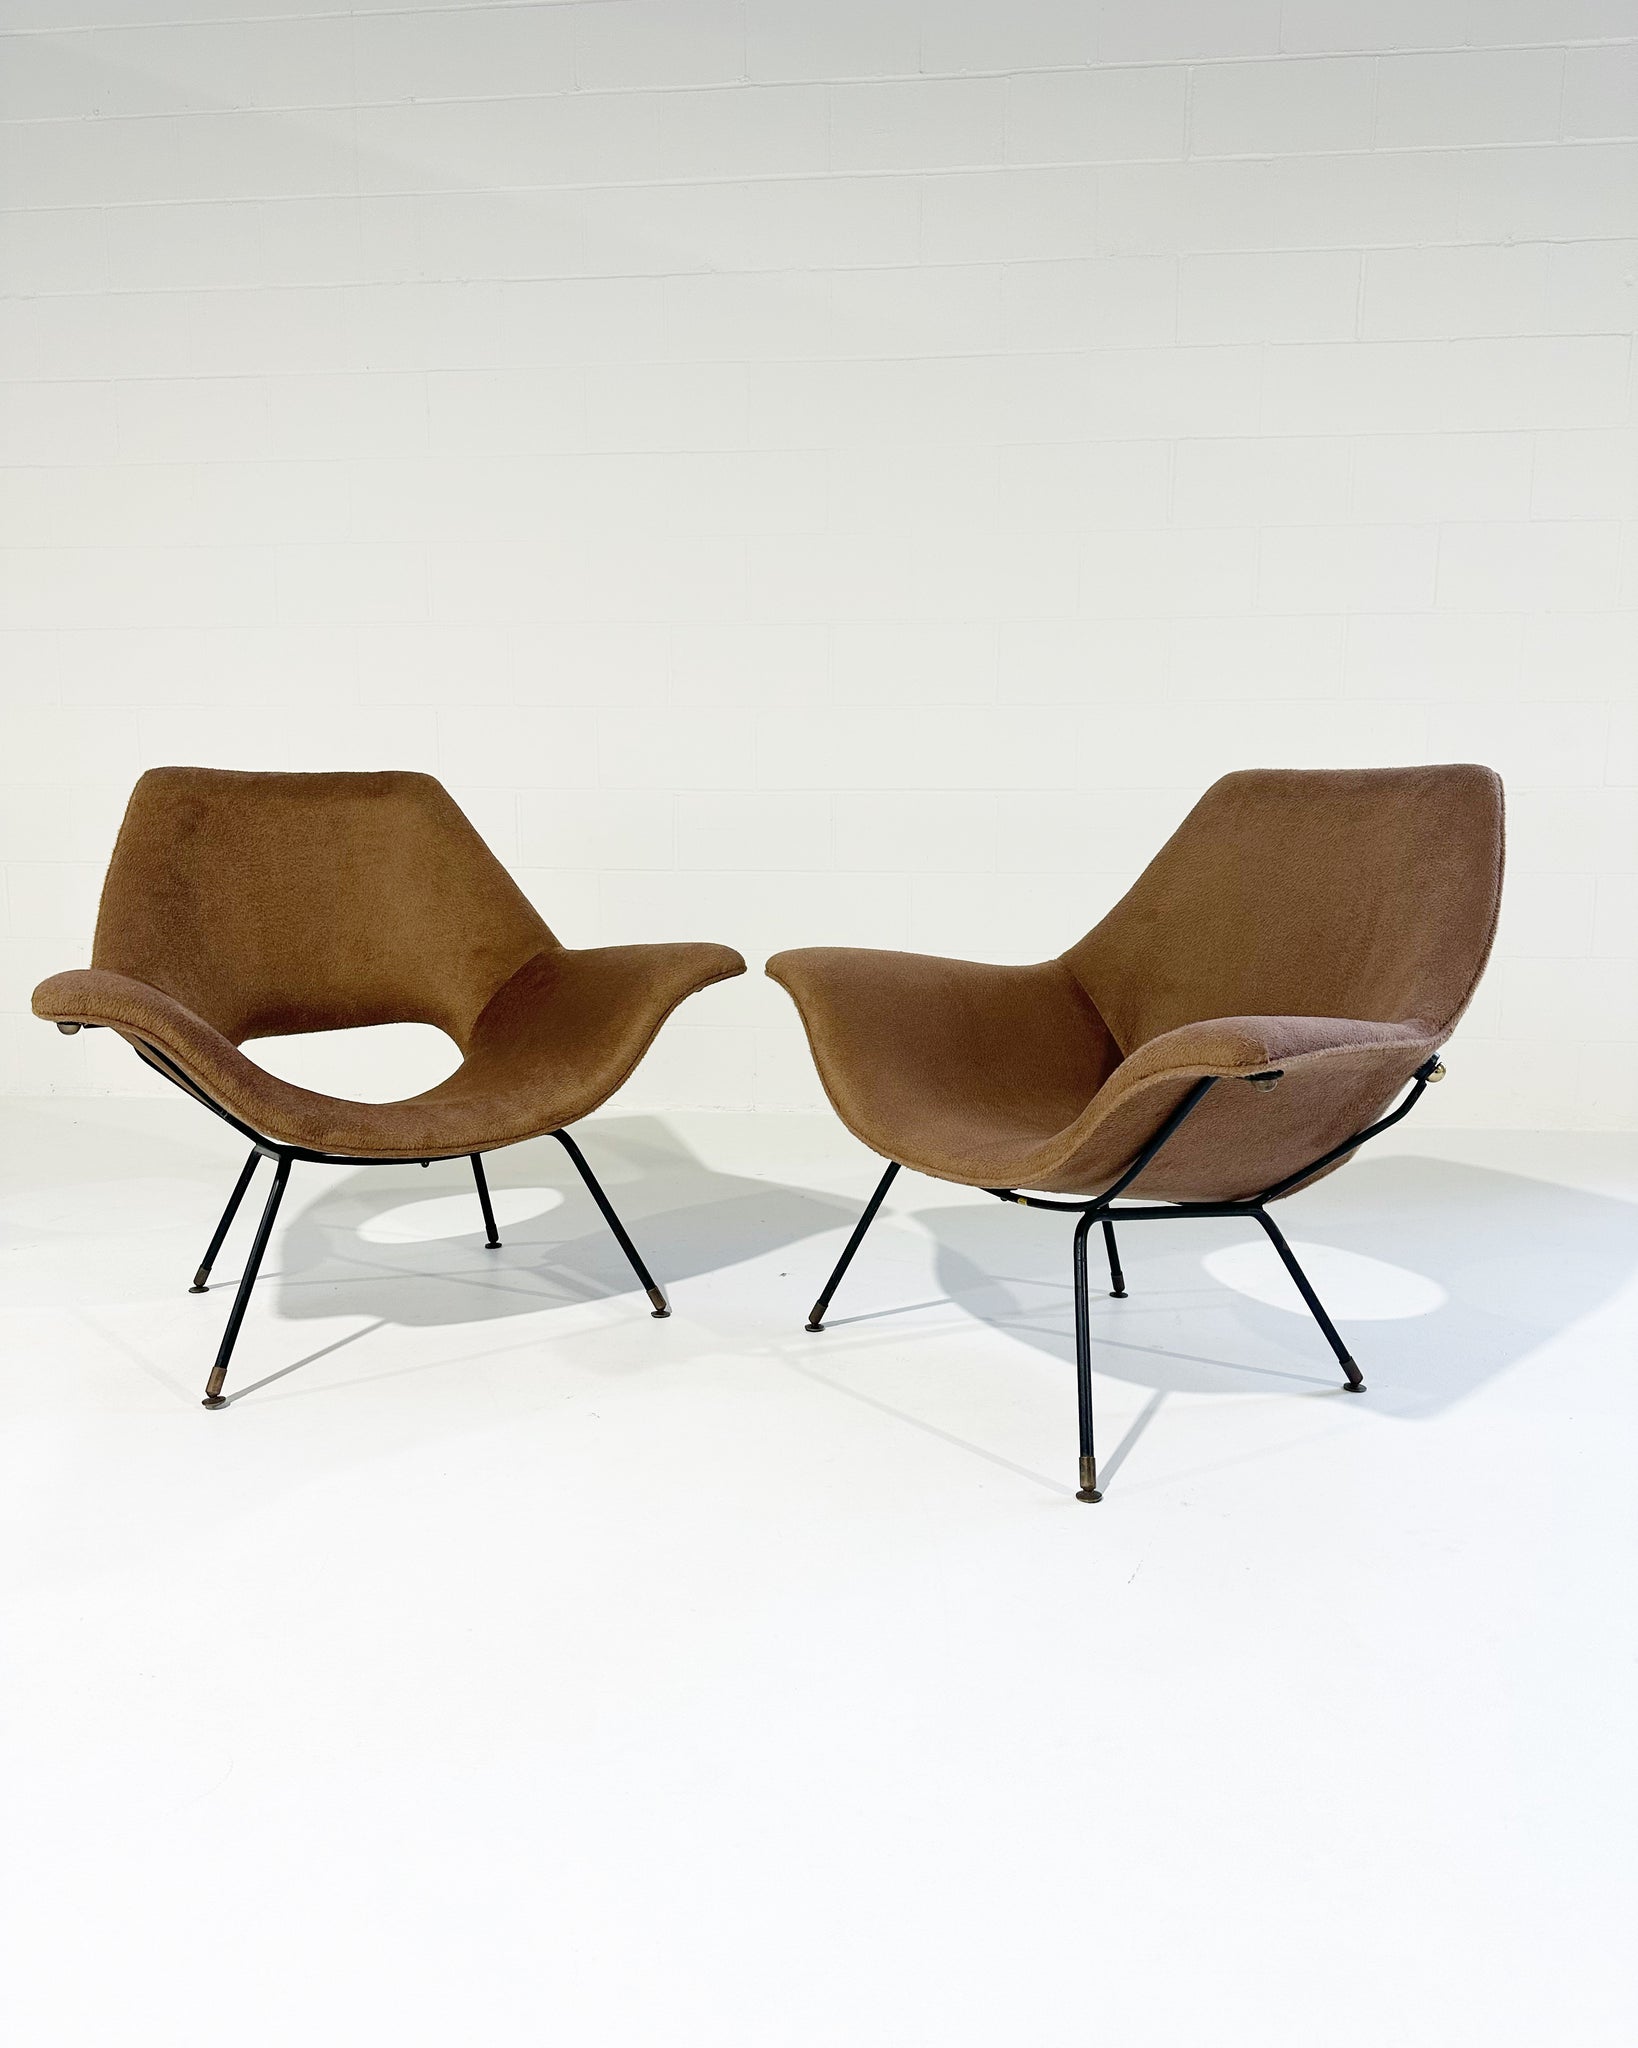 Lounge Chairs in Inata Alpaca Fabric, pair